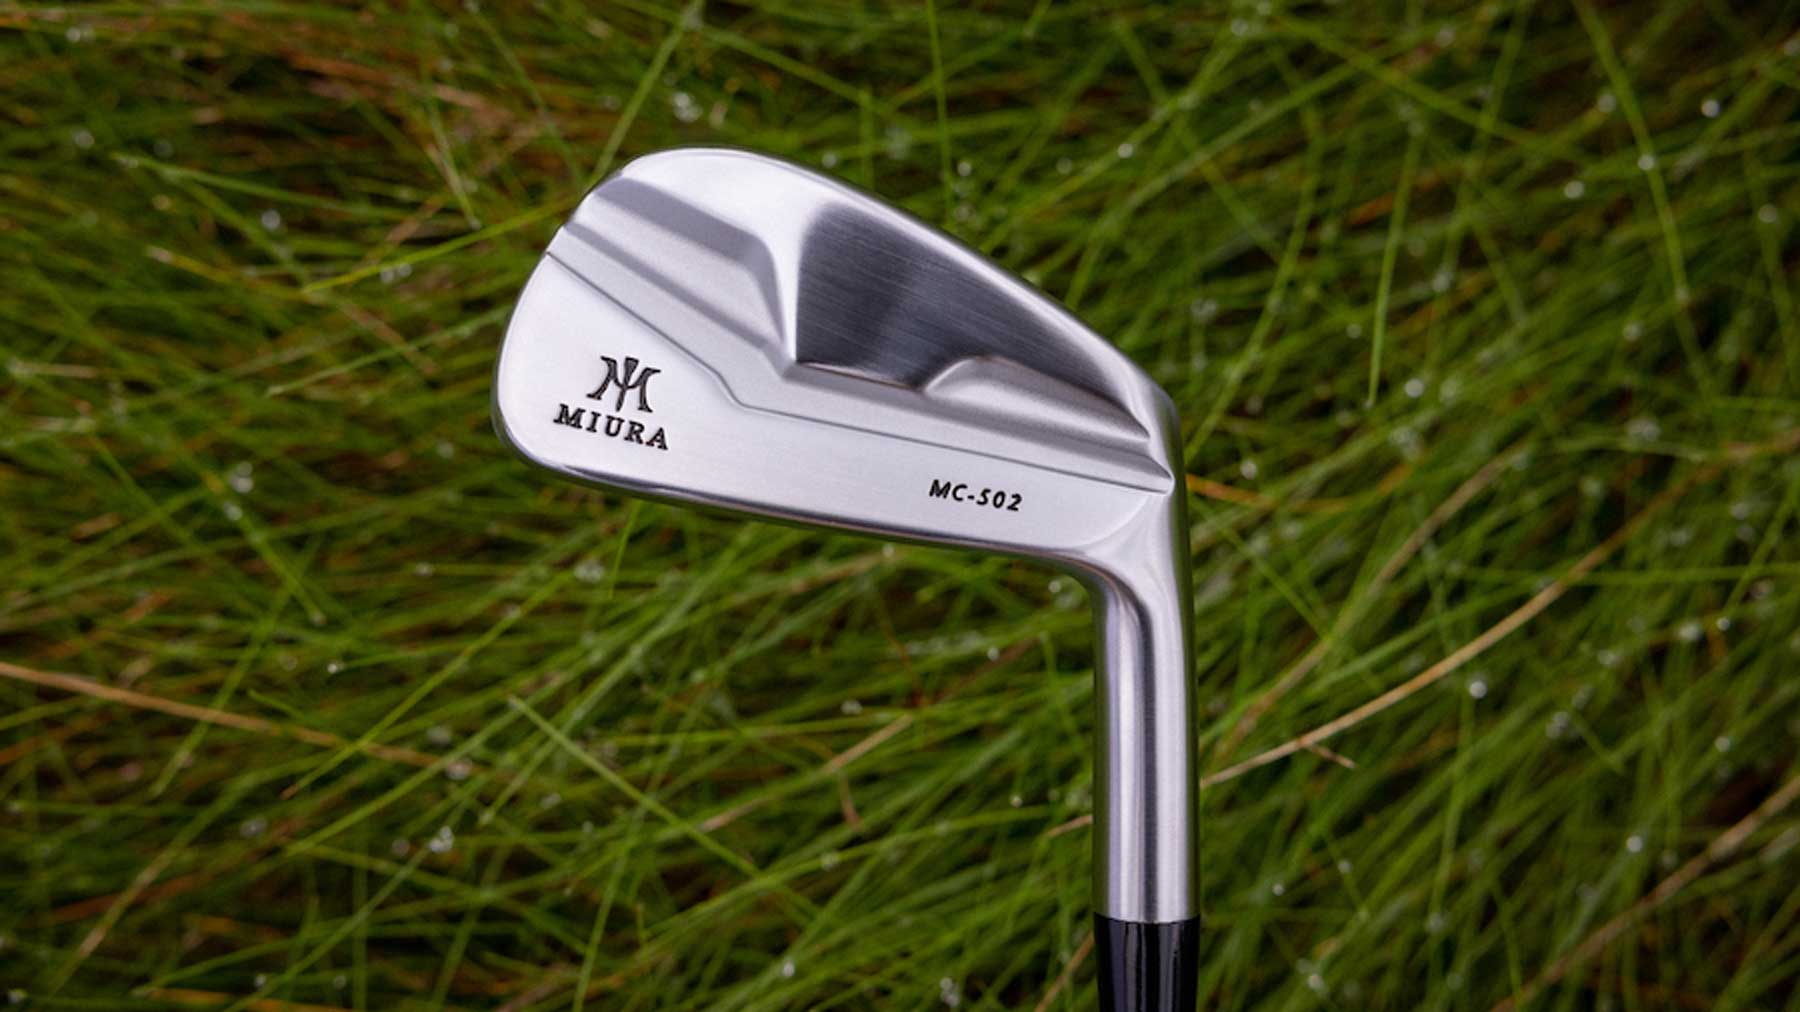 Nex Gen MC-502 Irons from Miura Golf [Equipment]